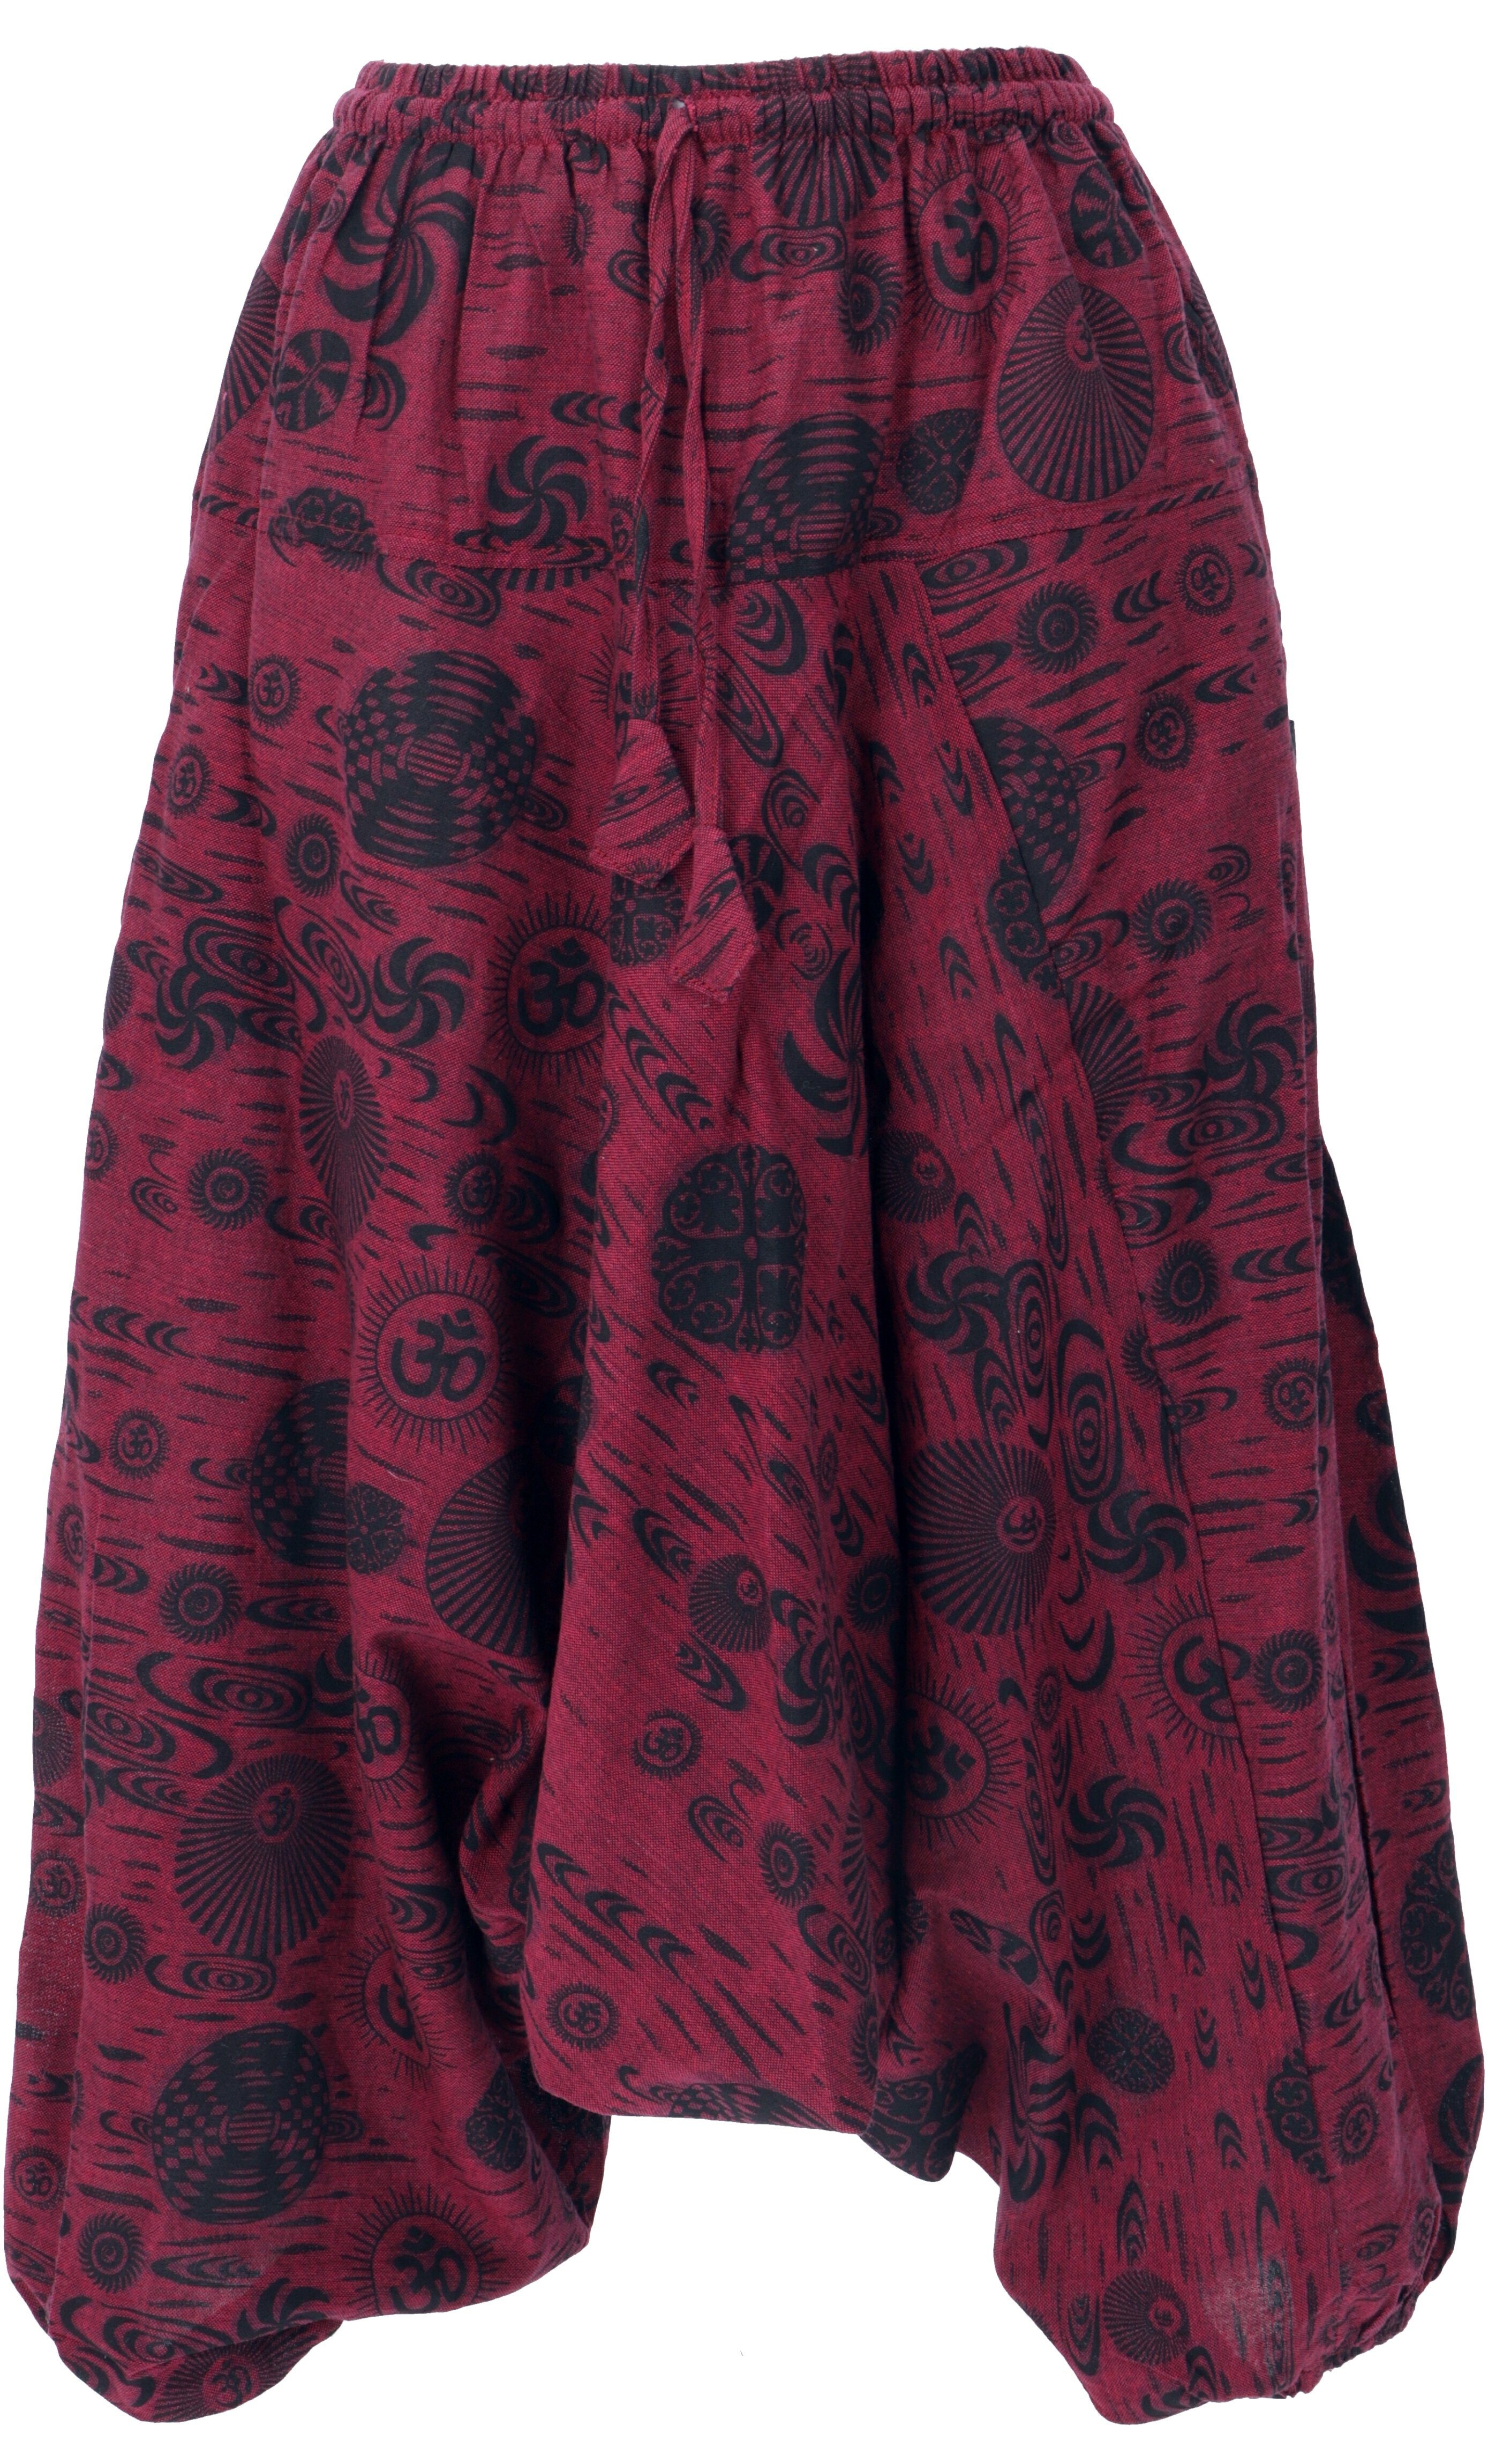 Guru-Shop Relaxhose Aladinhose Pluderhose Shorts alternative - Bekleidung 7/8 rot Länge Ethno Style